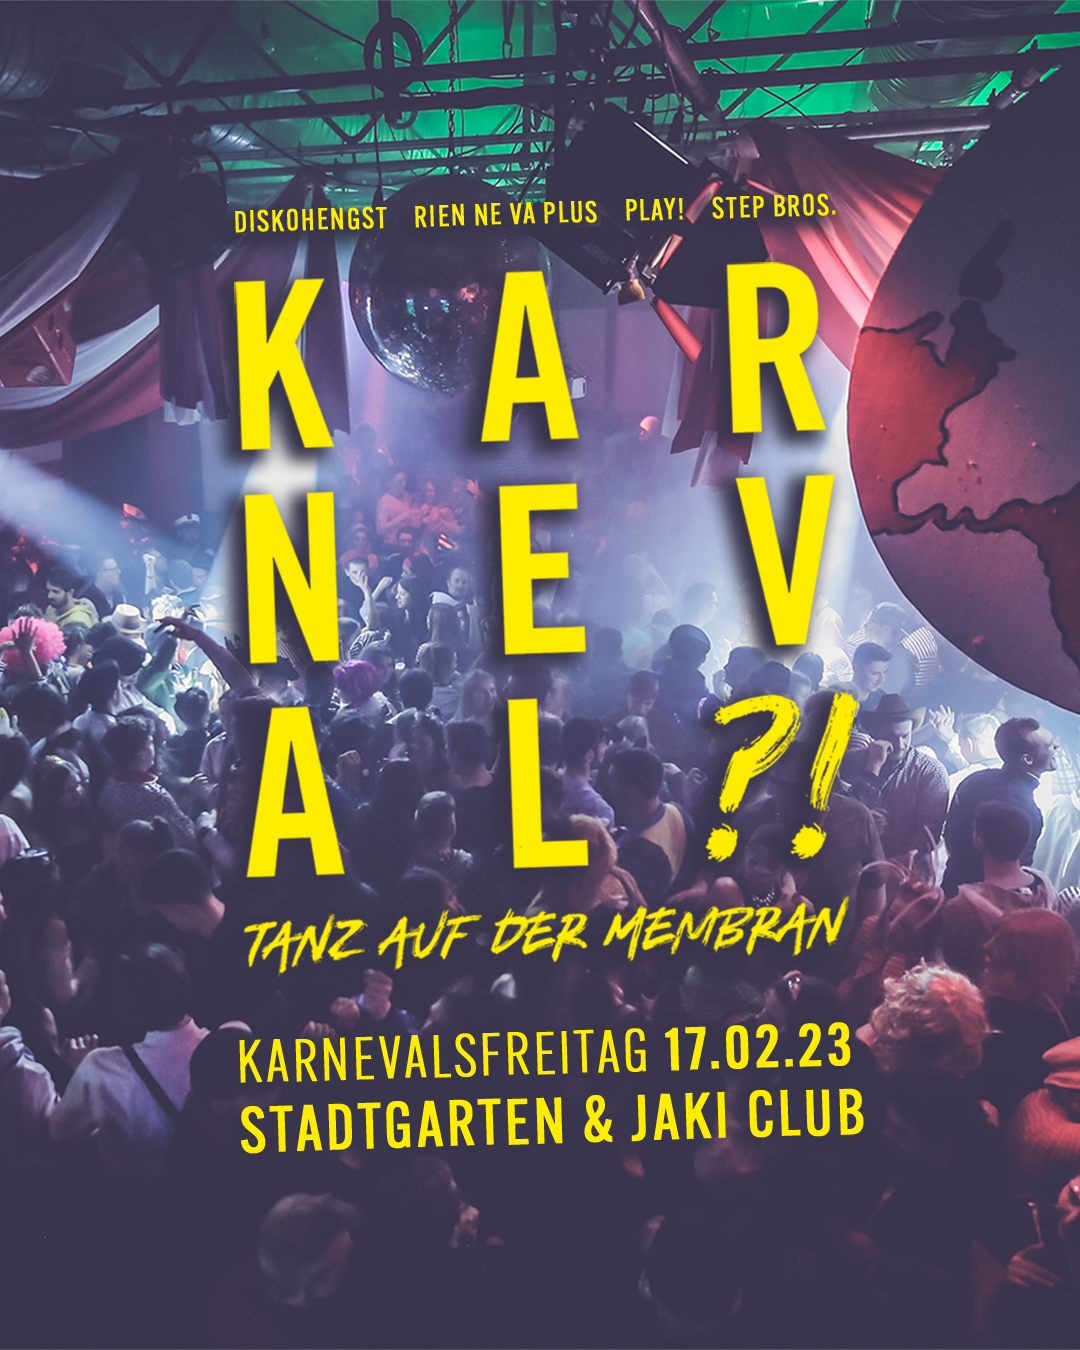 KARNEVAL!?! - Tanz auf der Membran with Diskohengst aka Shacke One, Tammo, Freddy + many more - フライヤー表